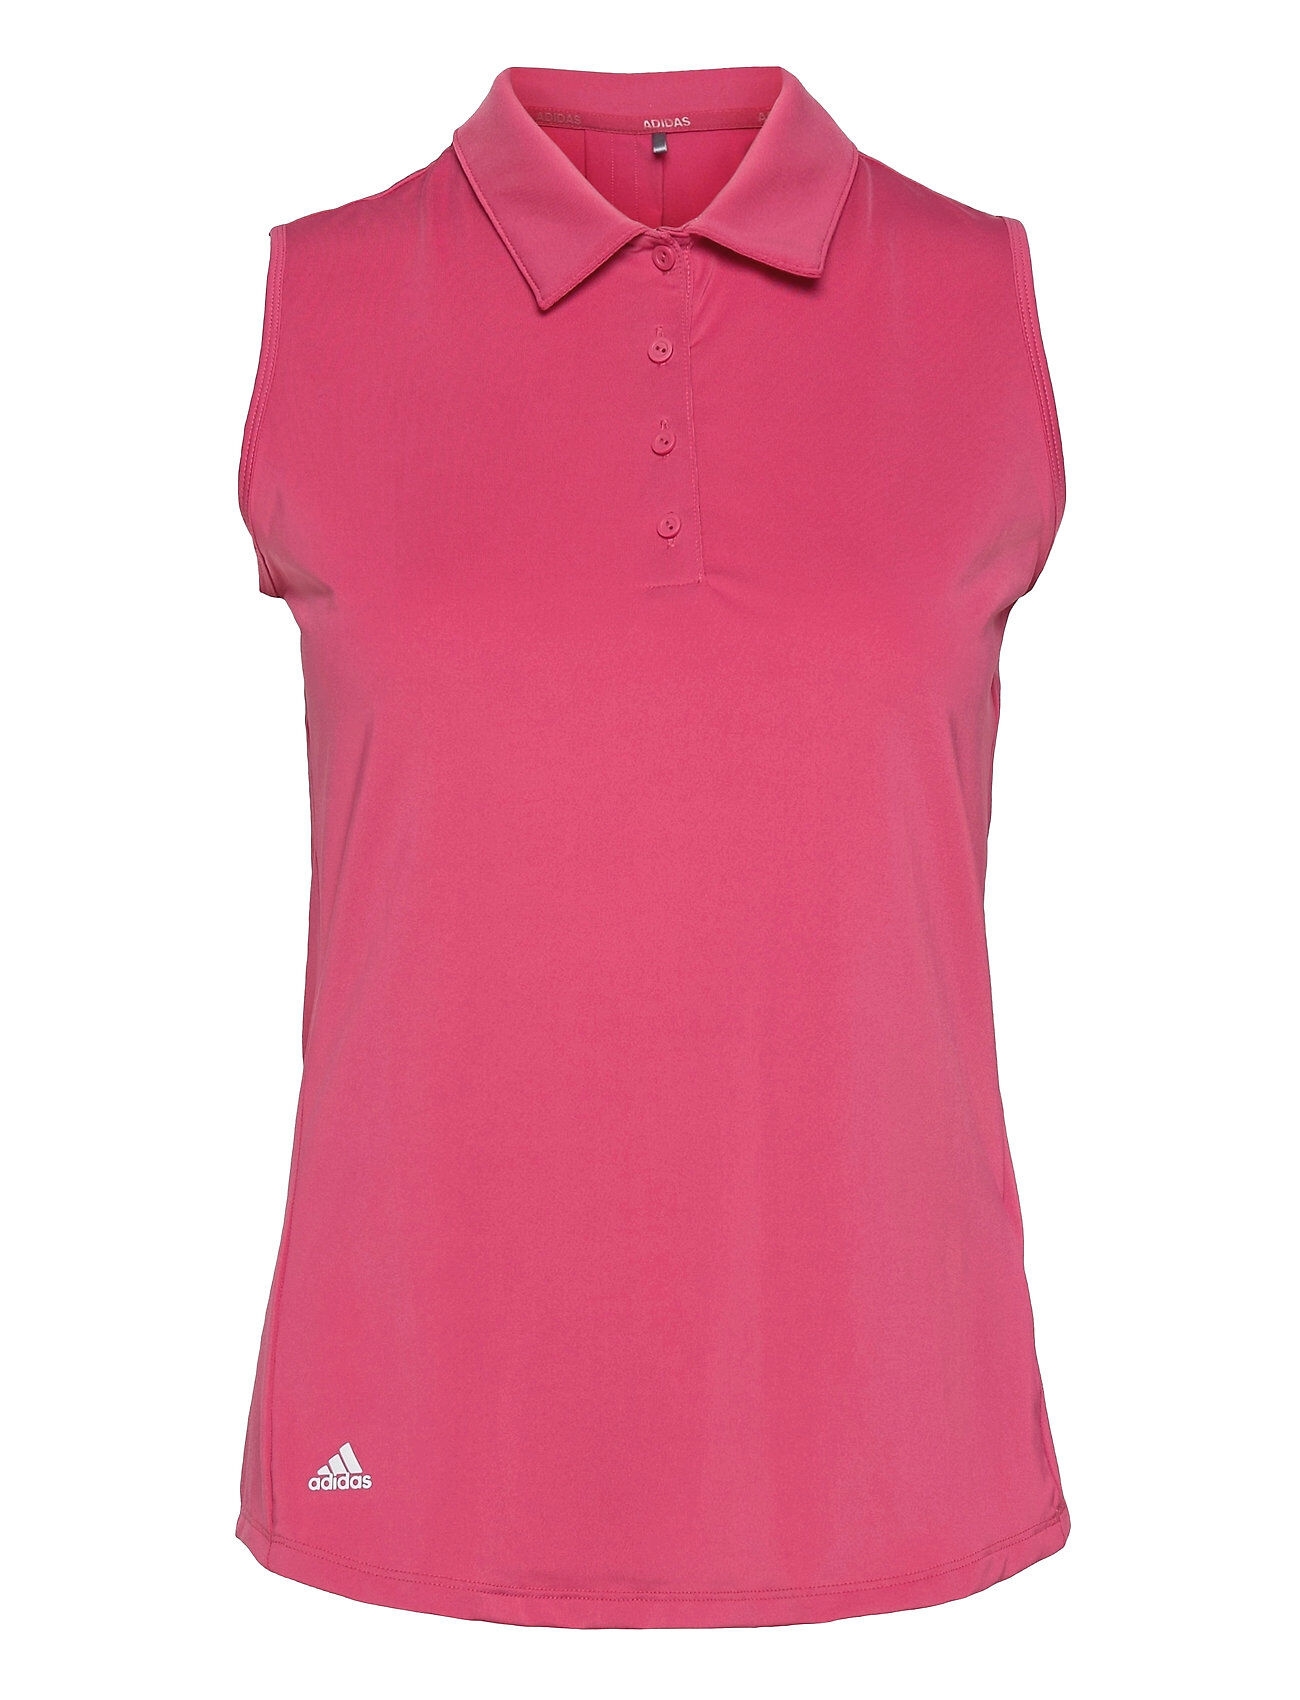 adidas Golf Ult Sld Sl P T-shirts & Tops Polos Rosa Adidas Golf